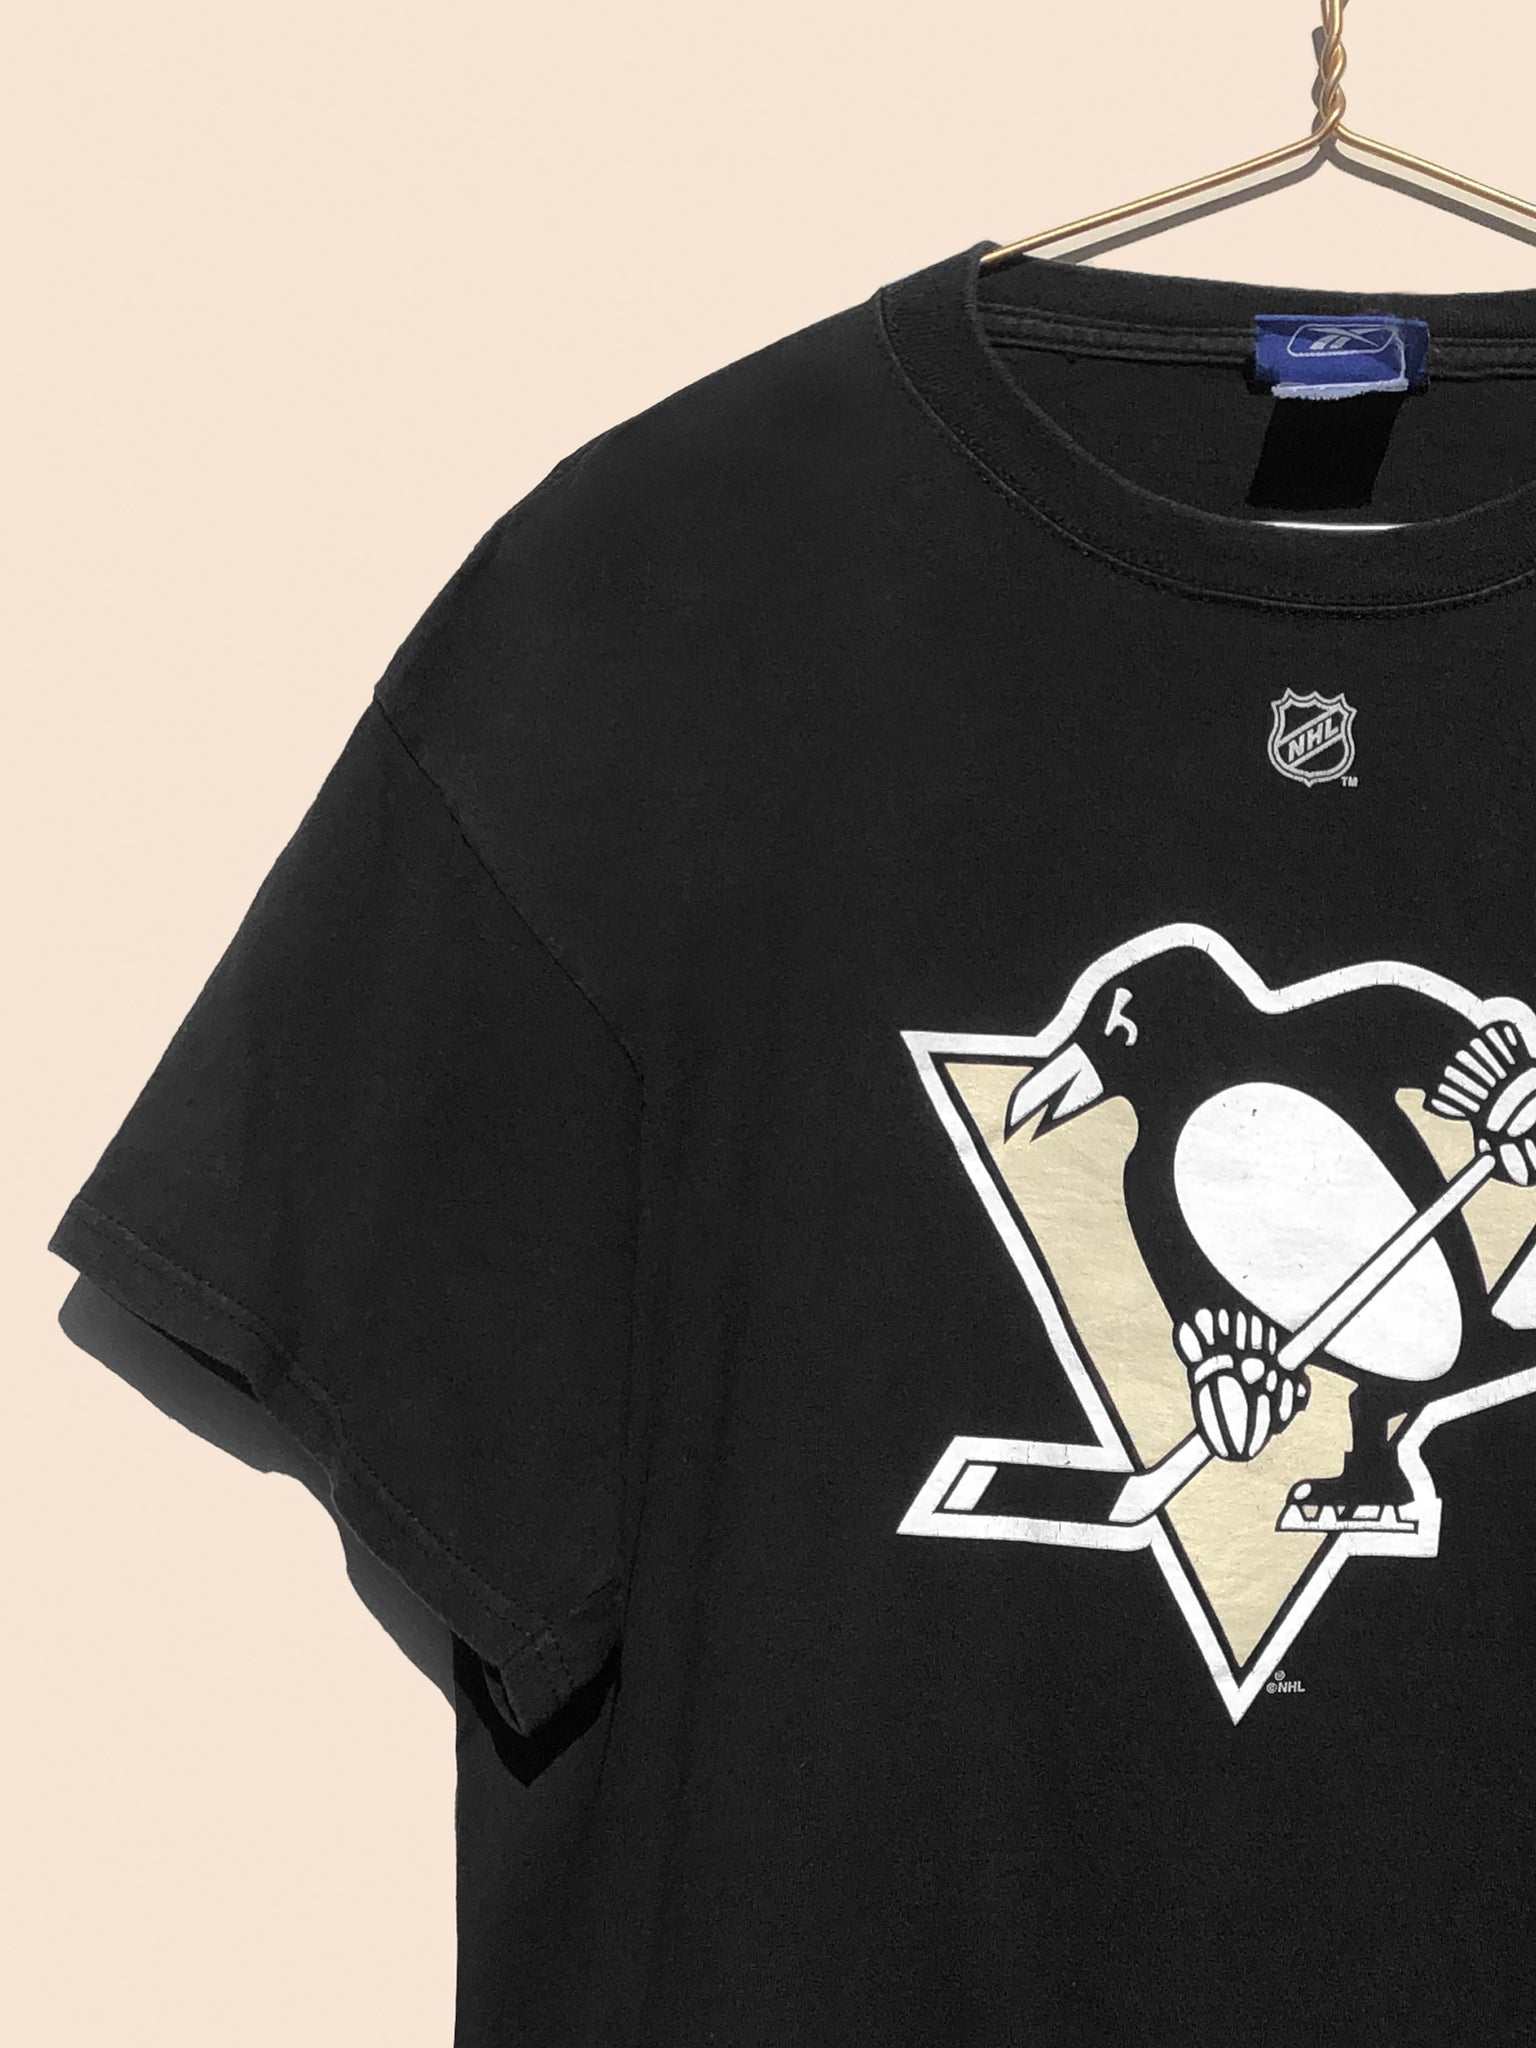 Sidney Crosby Penguins - Sidney Crosby - T-Shirt